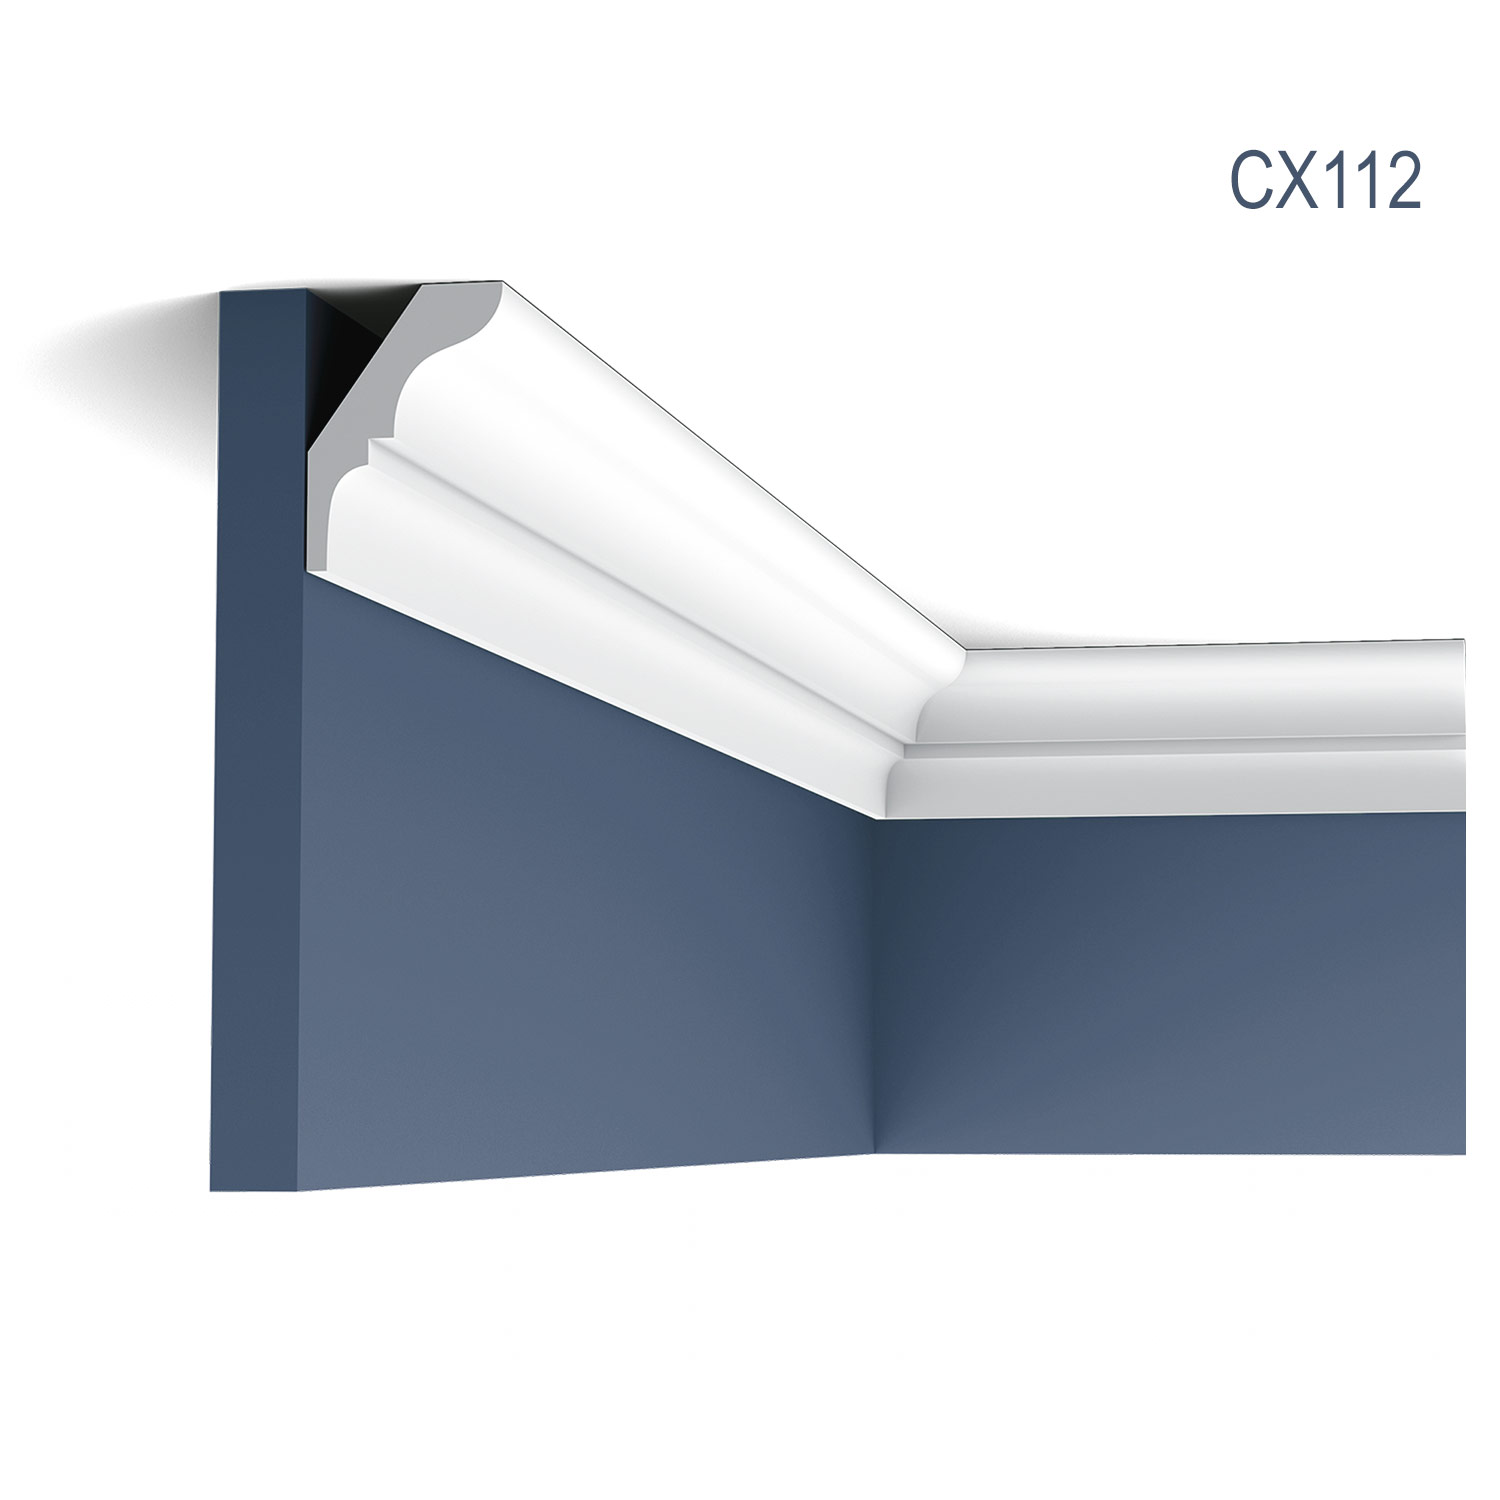 Cornisa Axxent CX112, Dimensiuni: 200 X 5.4 X 3.8 cm, Orac Decor Orac Decor